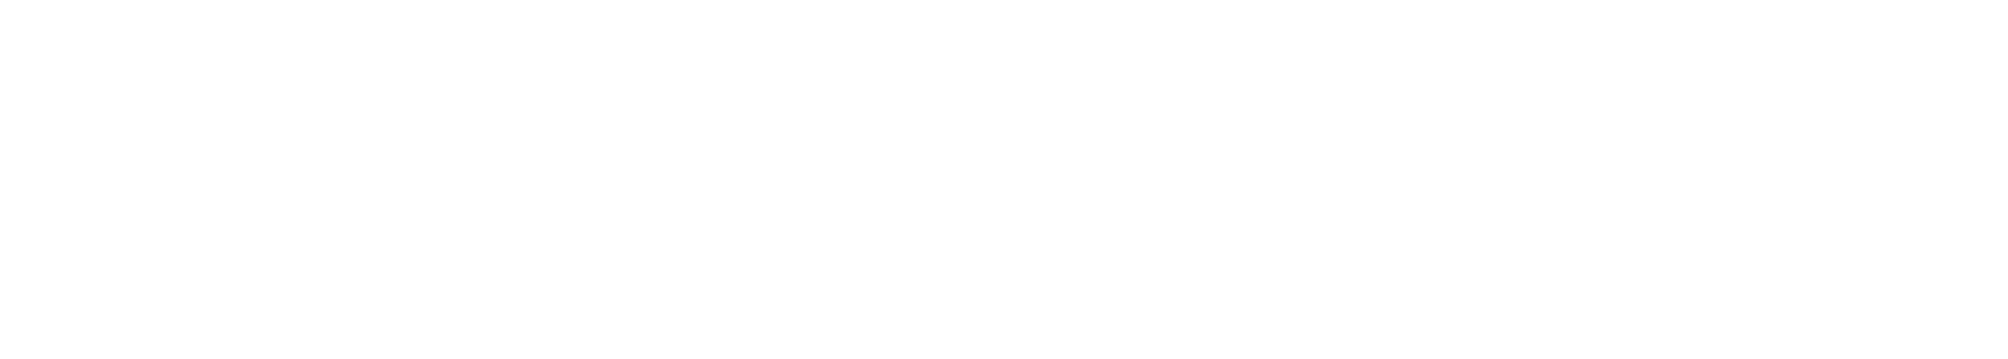 MarketConsultive GmbH logo